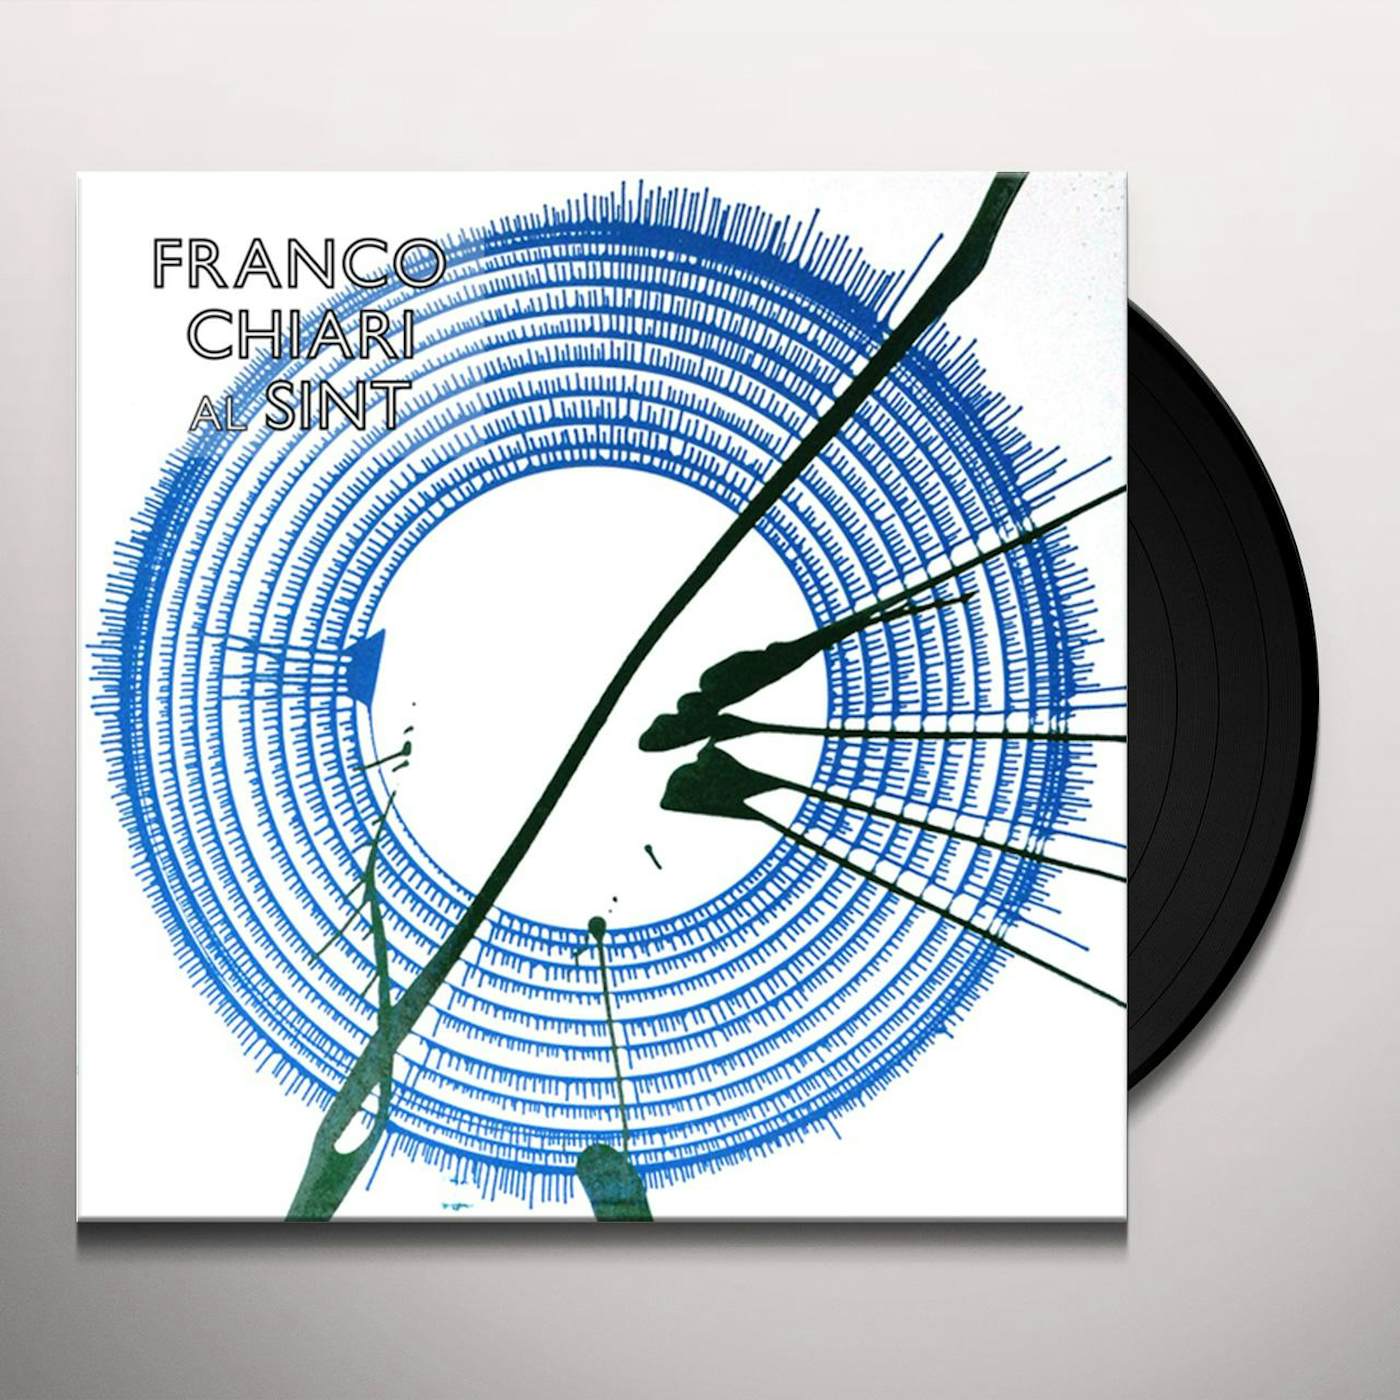 Franco Chiari Al Sint Vinyl Record